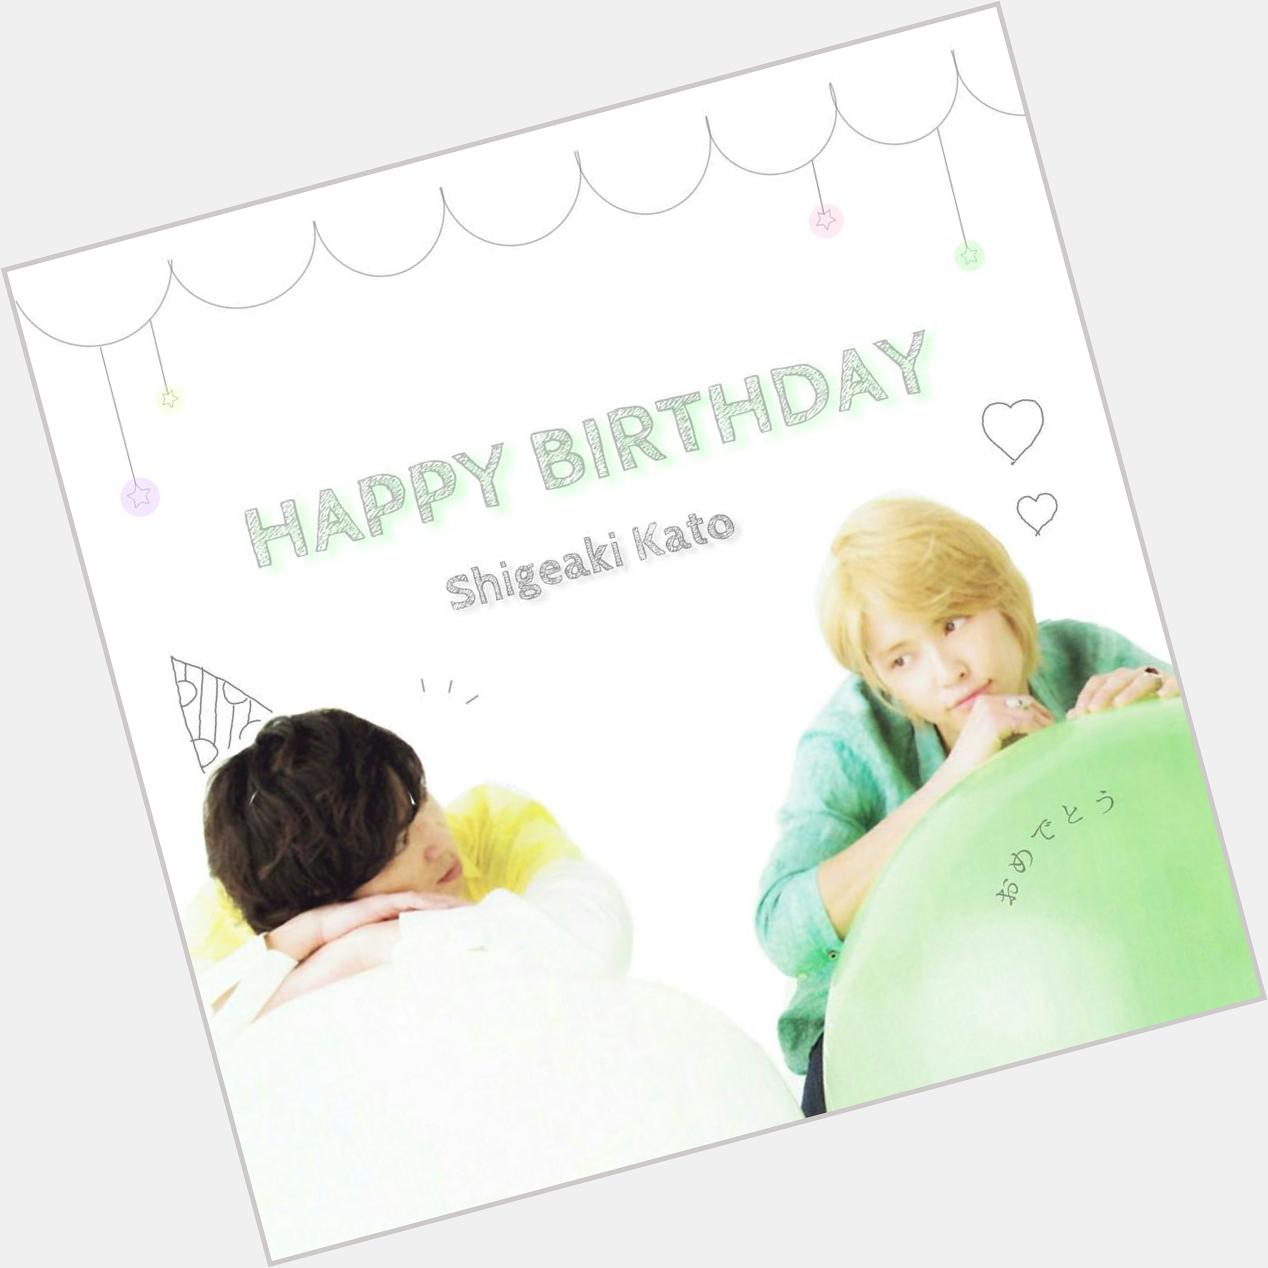 Happy Birthday Shigeaki Kato.                